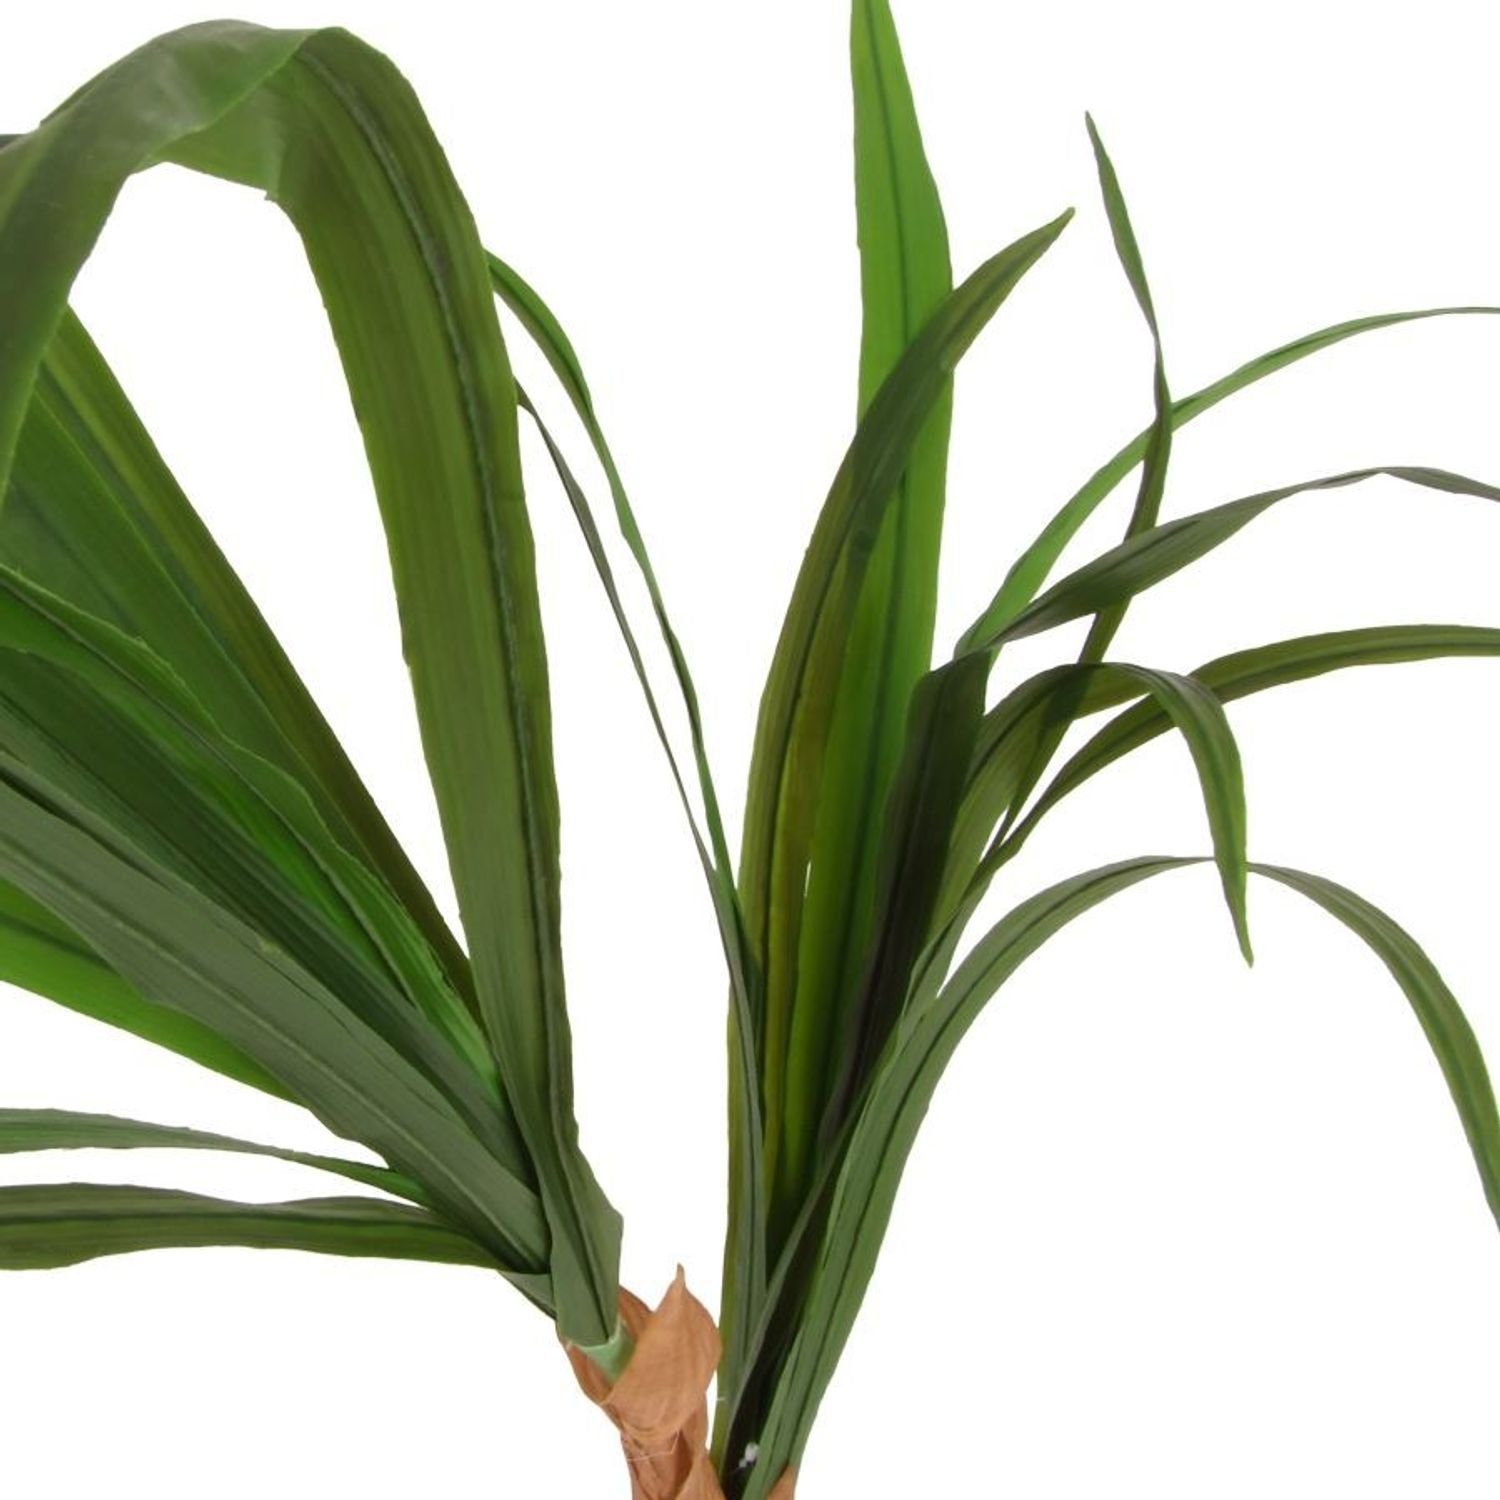 Kunstpflanze im Topf naturgetreu BURI Künstliche Kunstpflanze Yucca-Palme Zimmerpflanze,